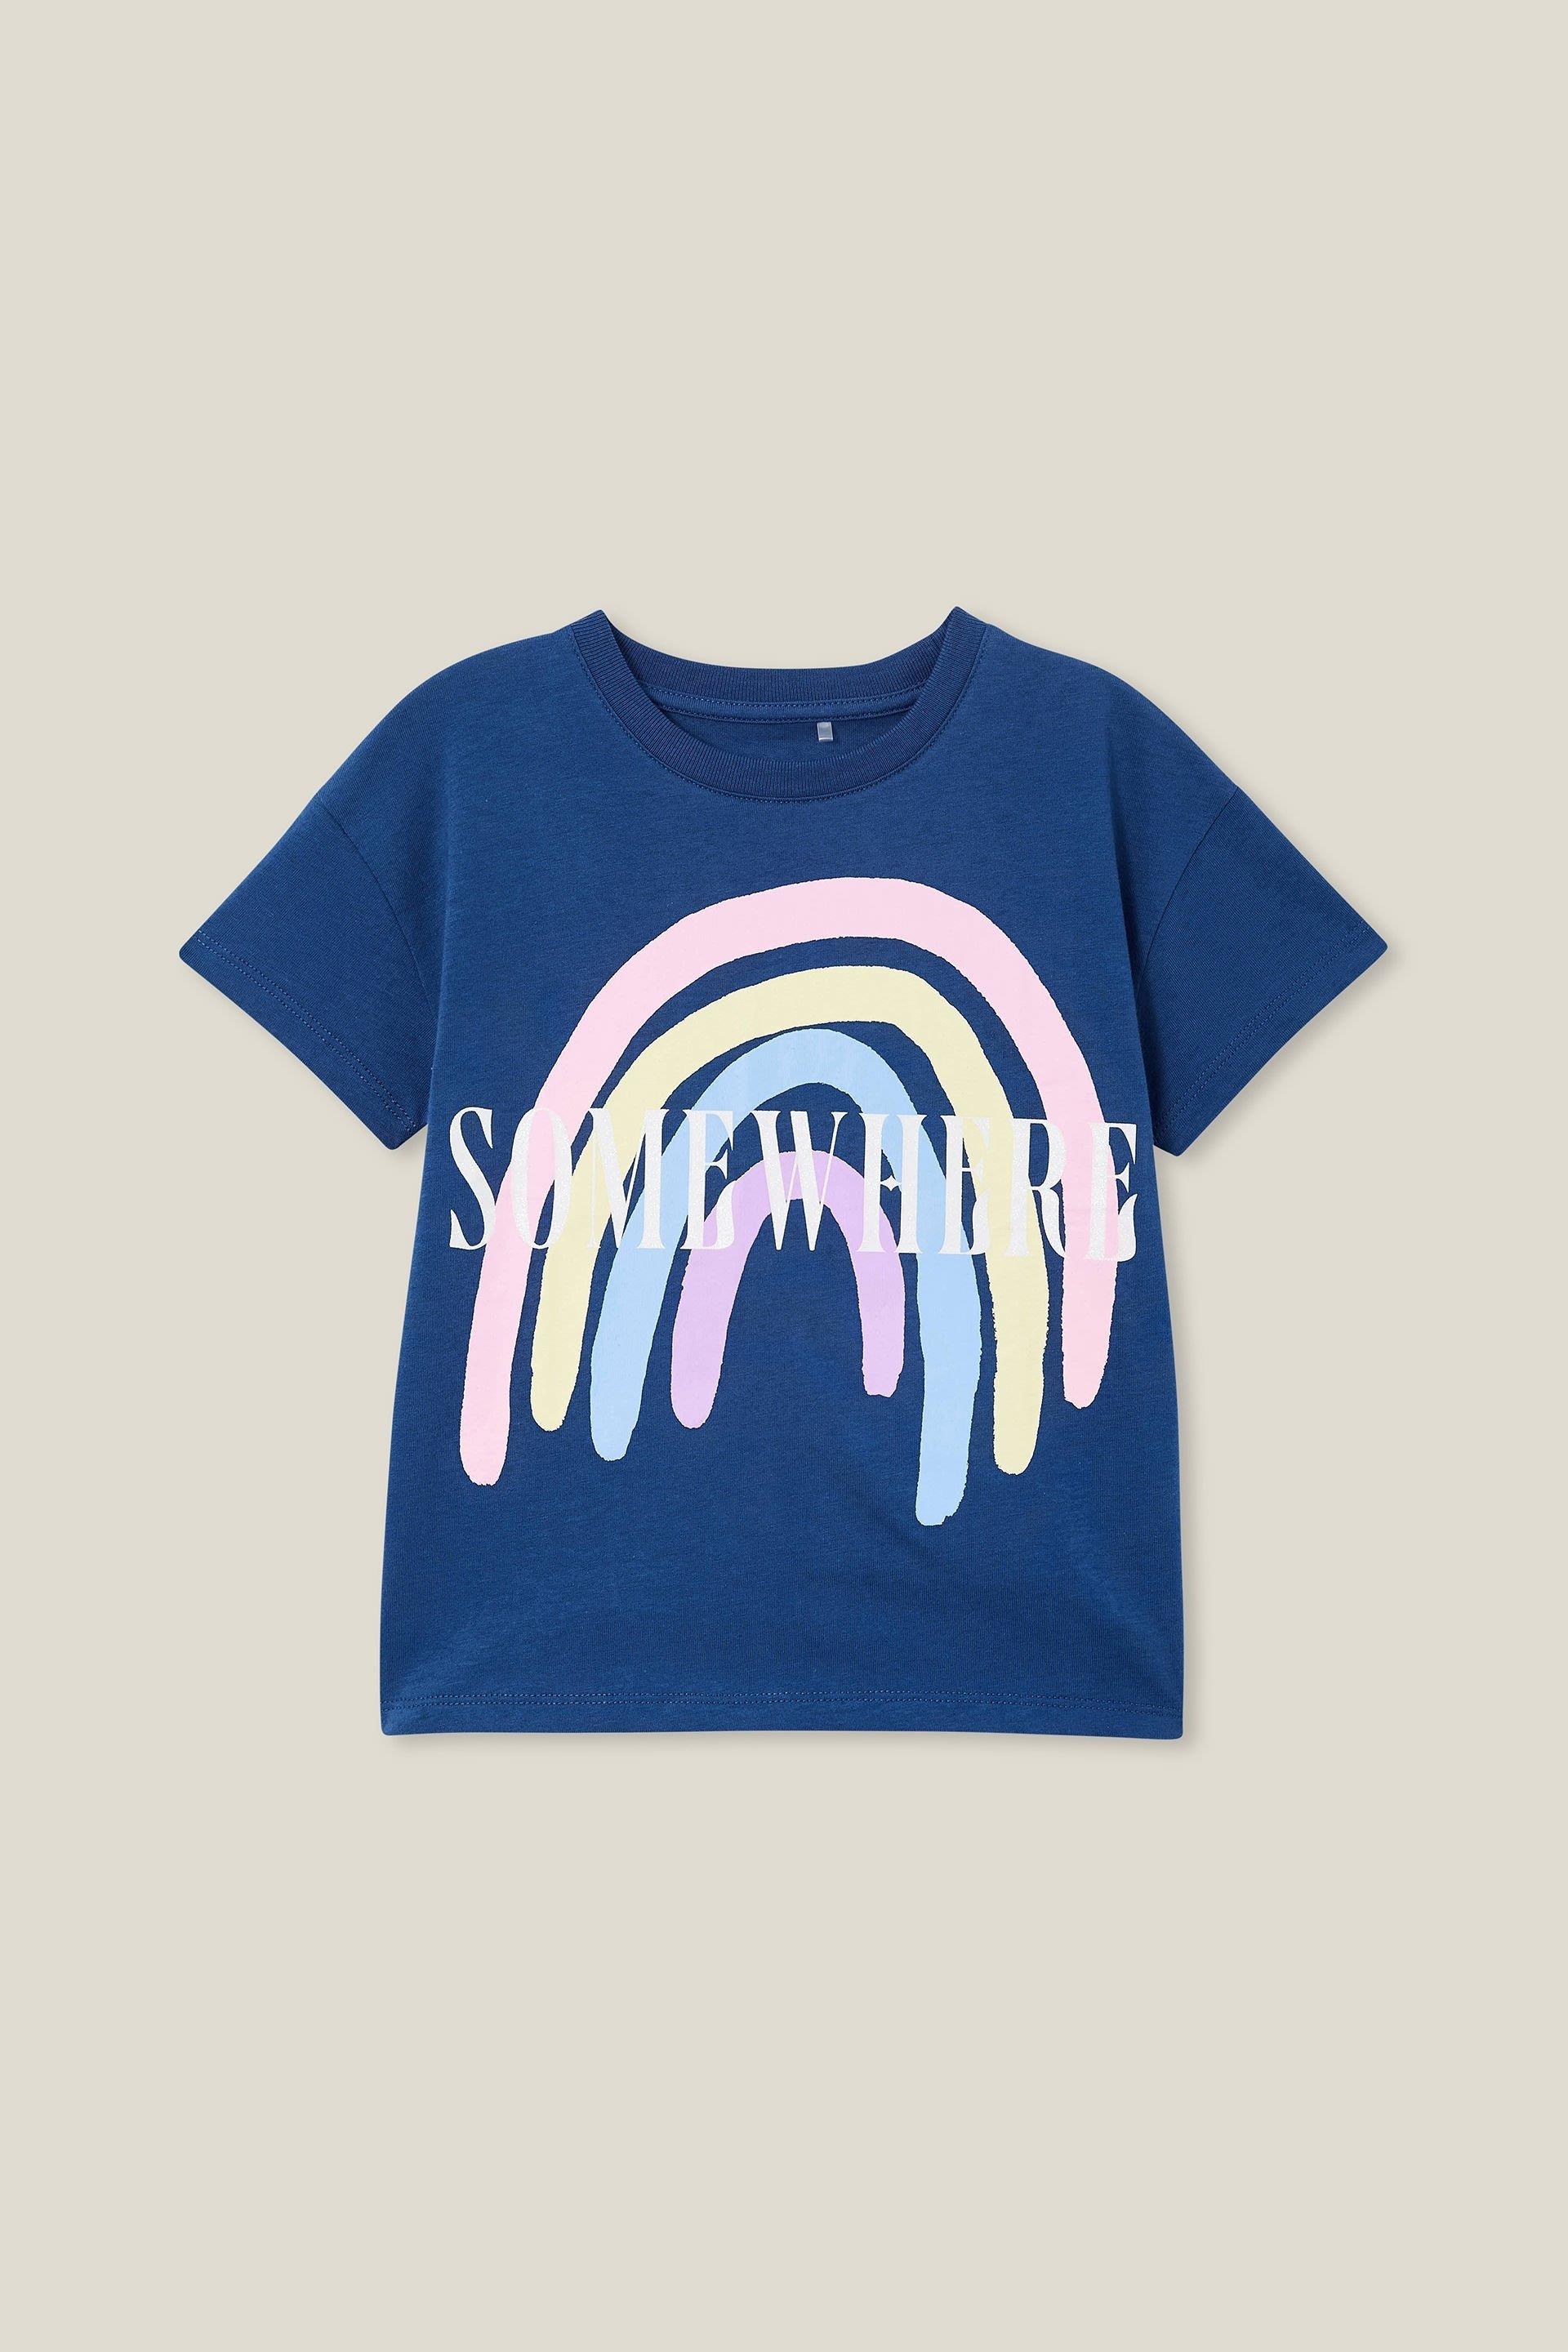 Cotton On Kids - Poppy Short Sleeve Print Tee - Petty blue/somewhere rainbow